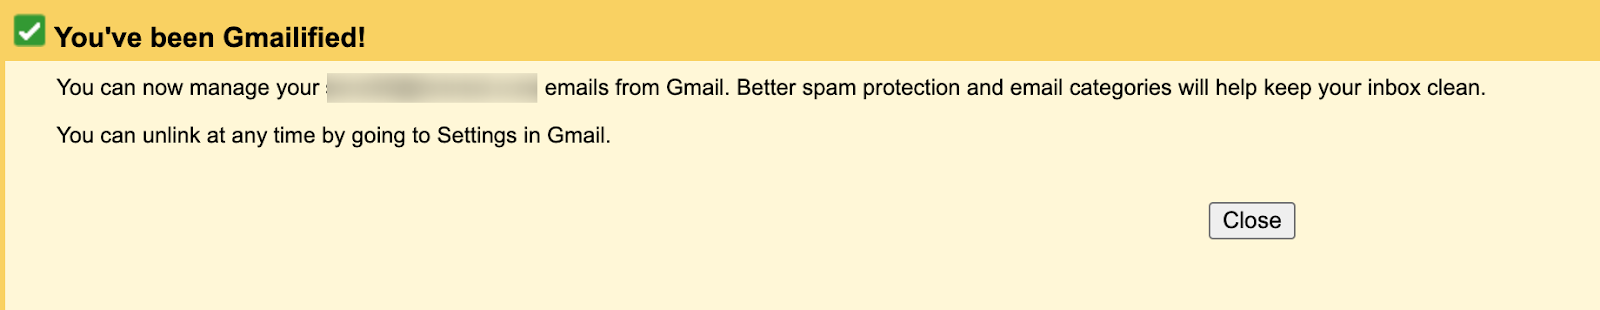 gmail-alias-confirmation